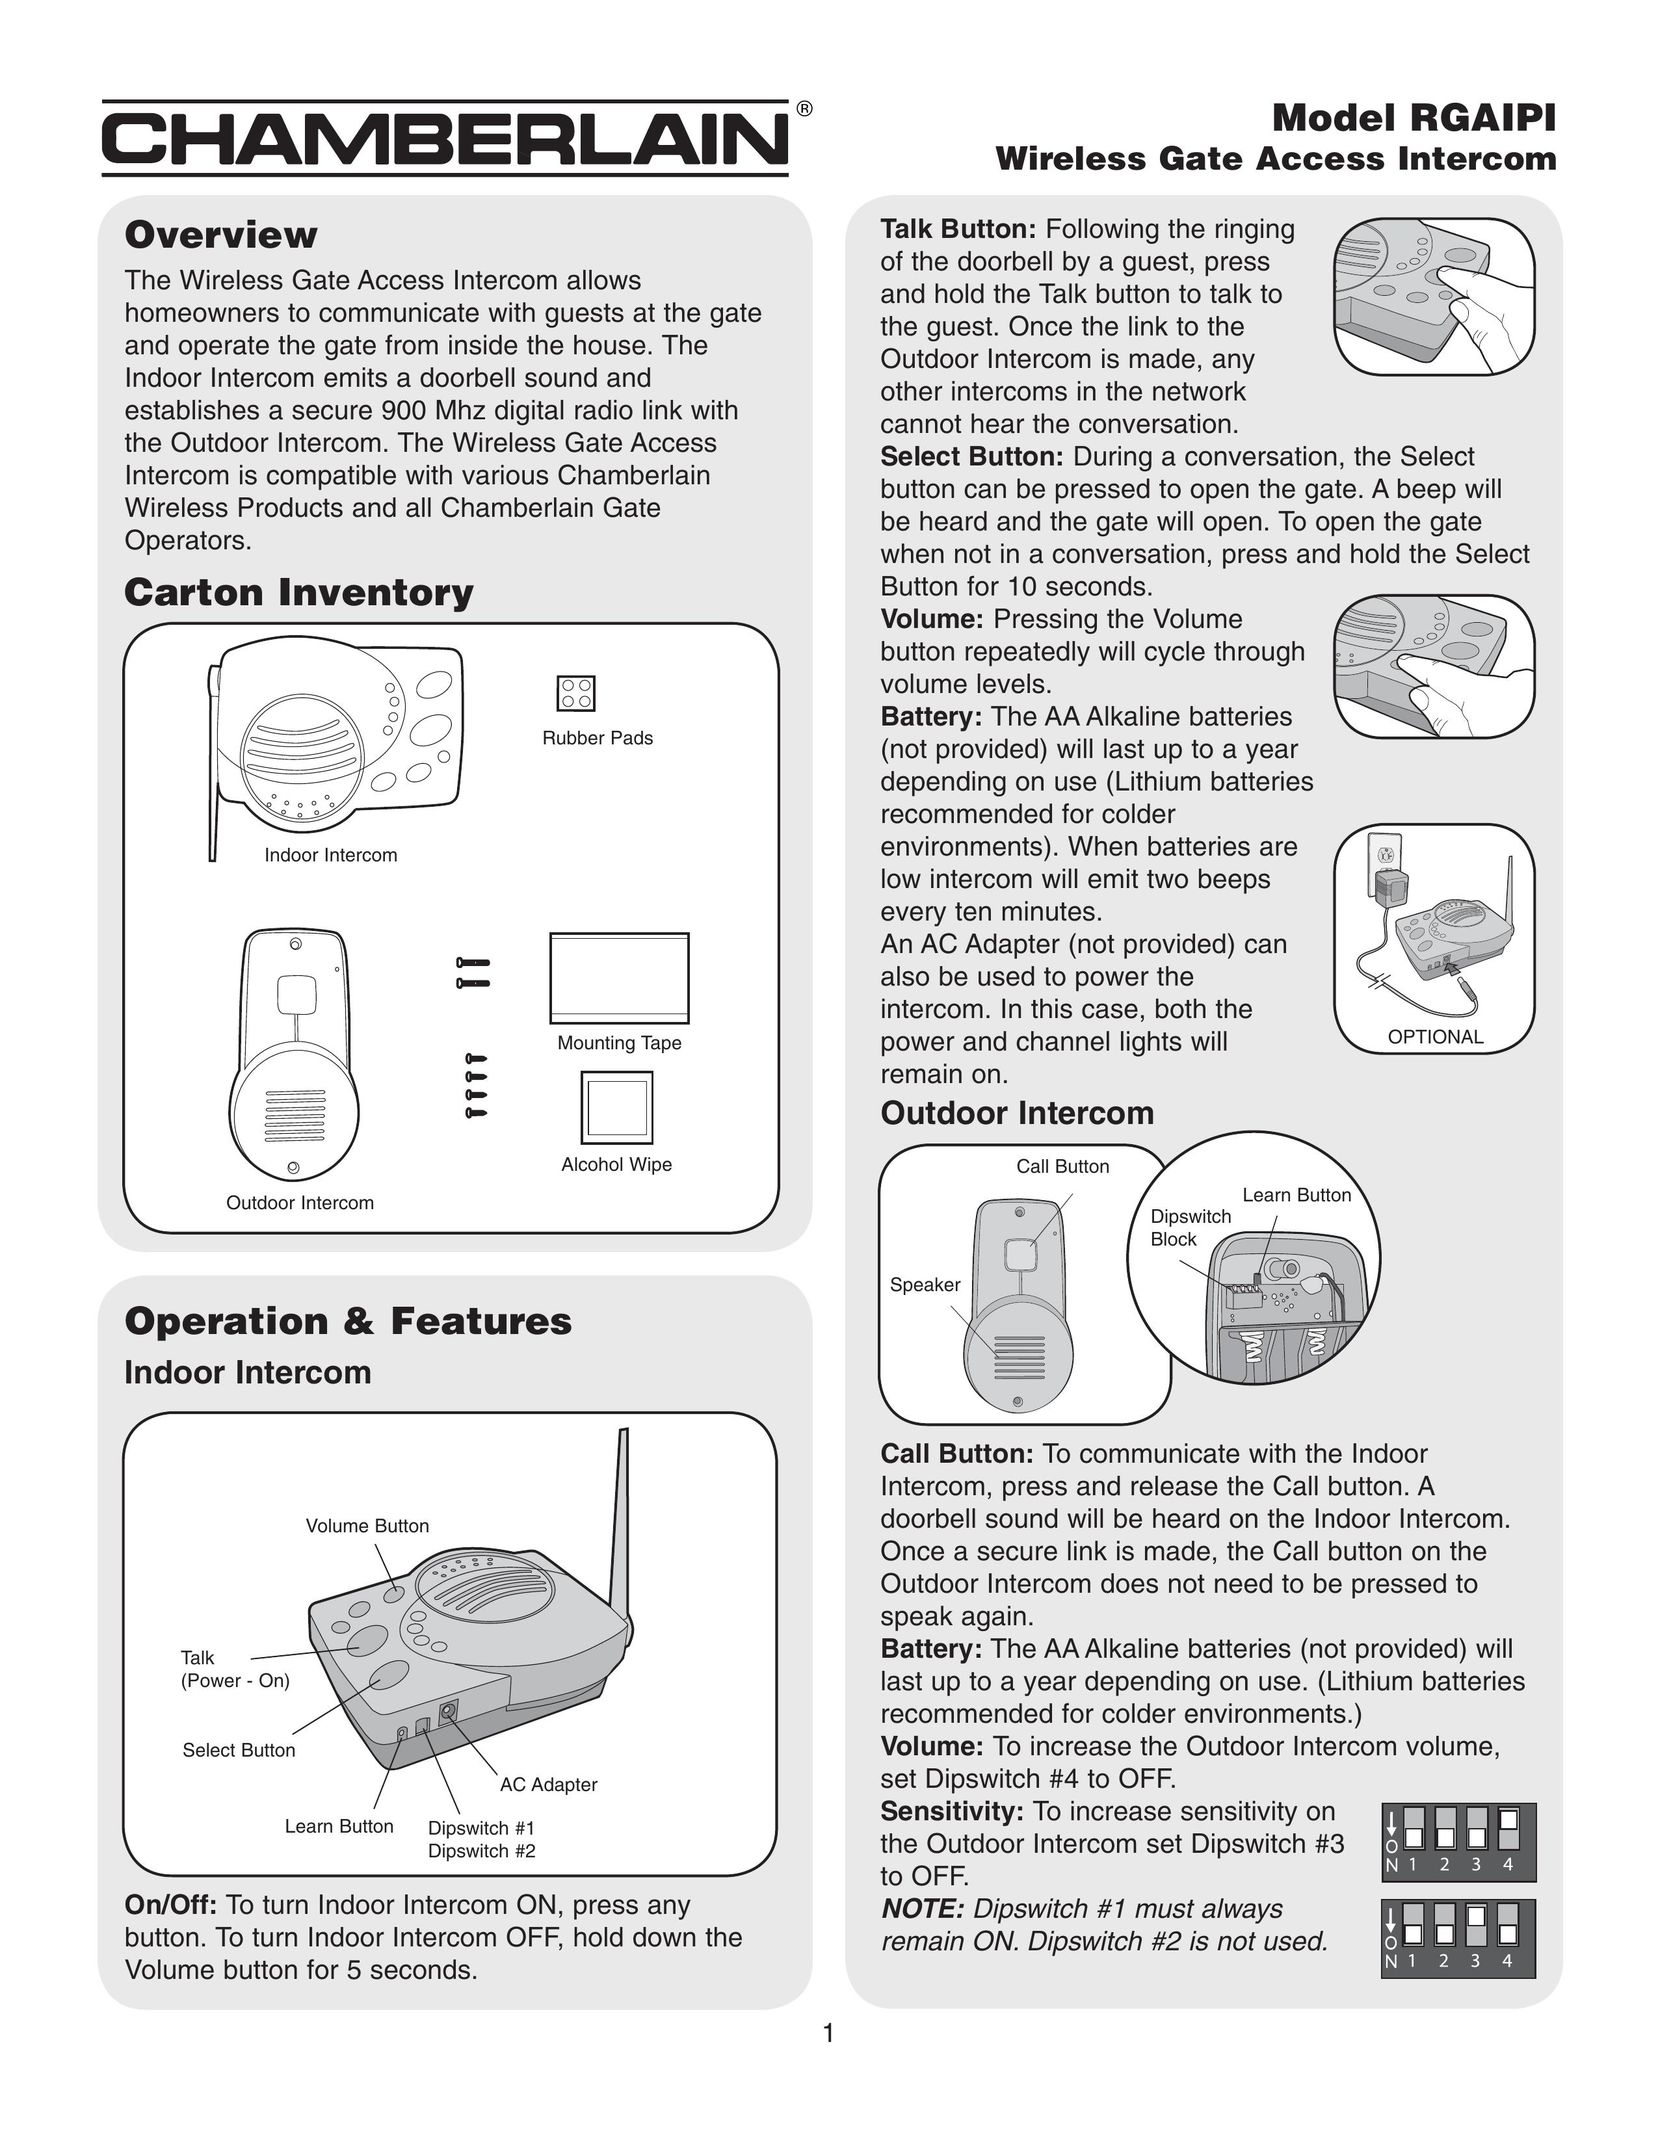 Chamberlain RGAIPI Intercom System User Manual